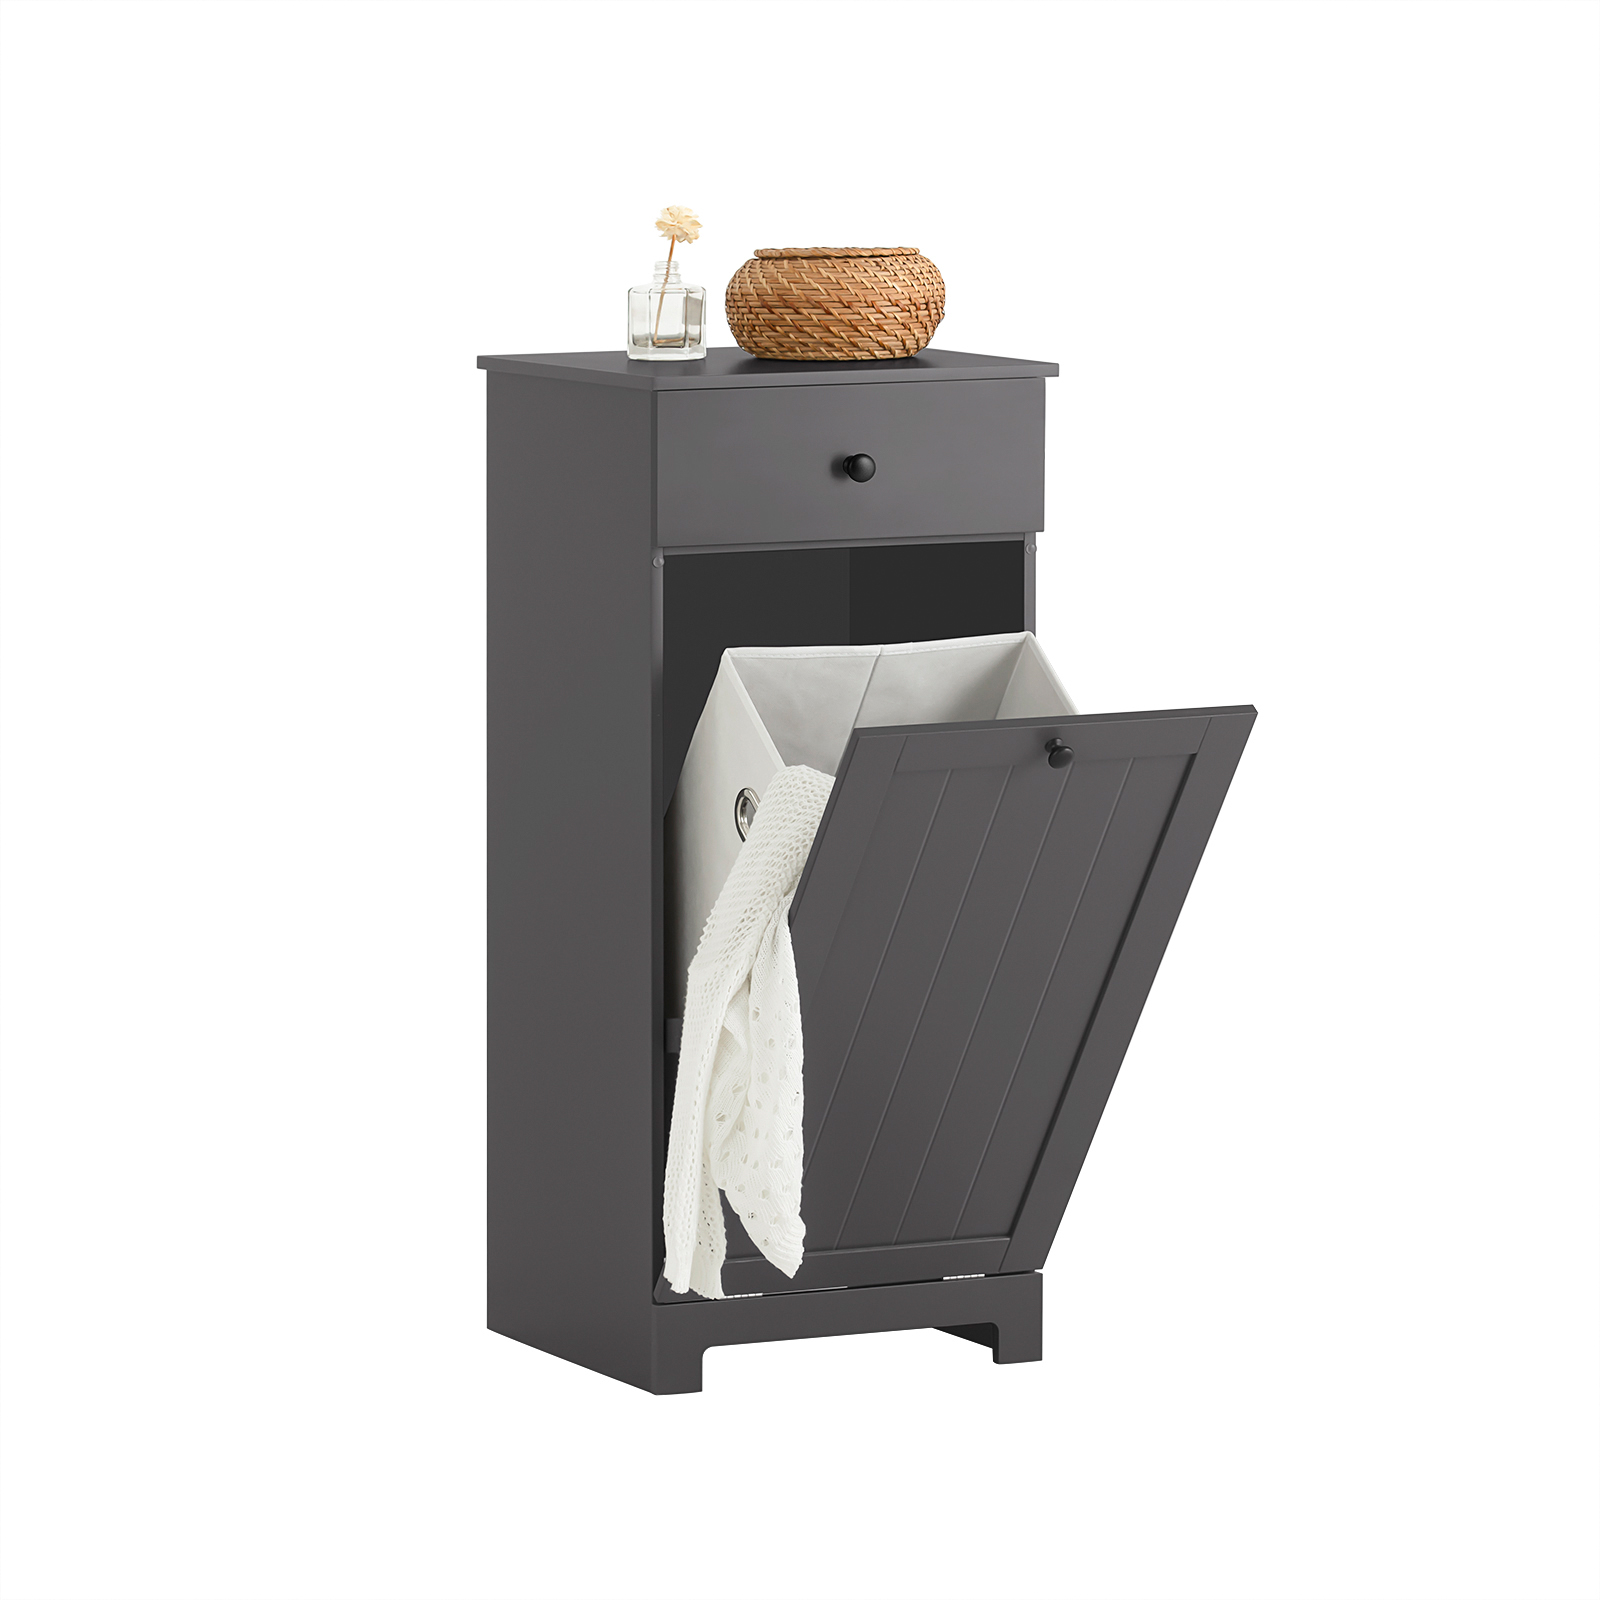 SoBuy BZR21-DG, Bathroom Laundry Basket Bathroom Storage Cabinet Unit with Drawer, 40x38x90cm